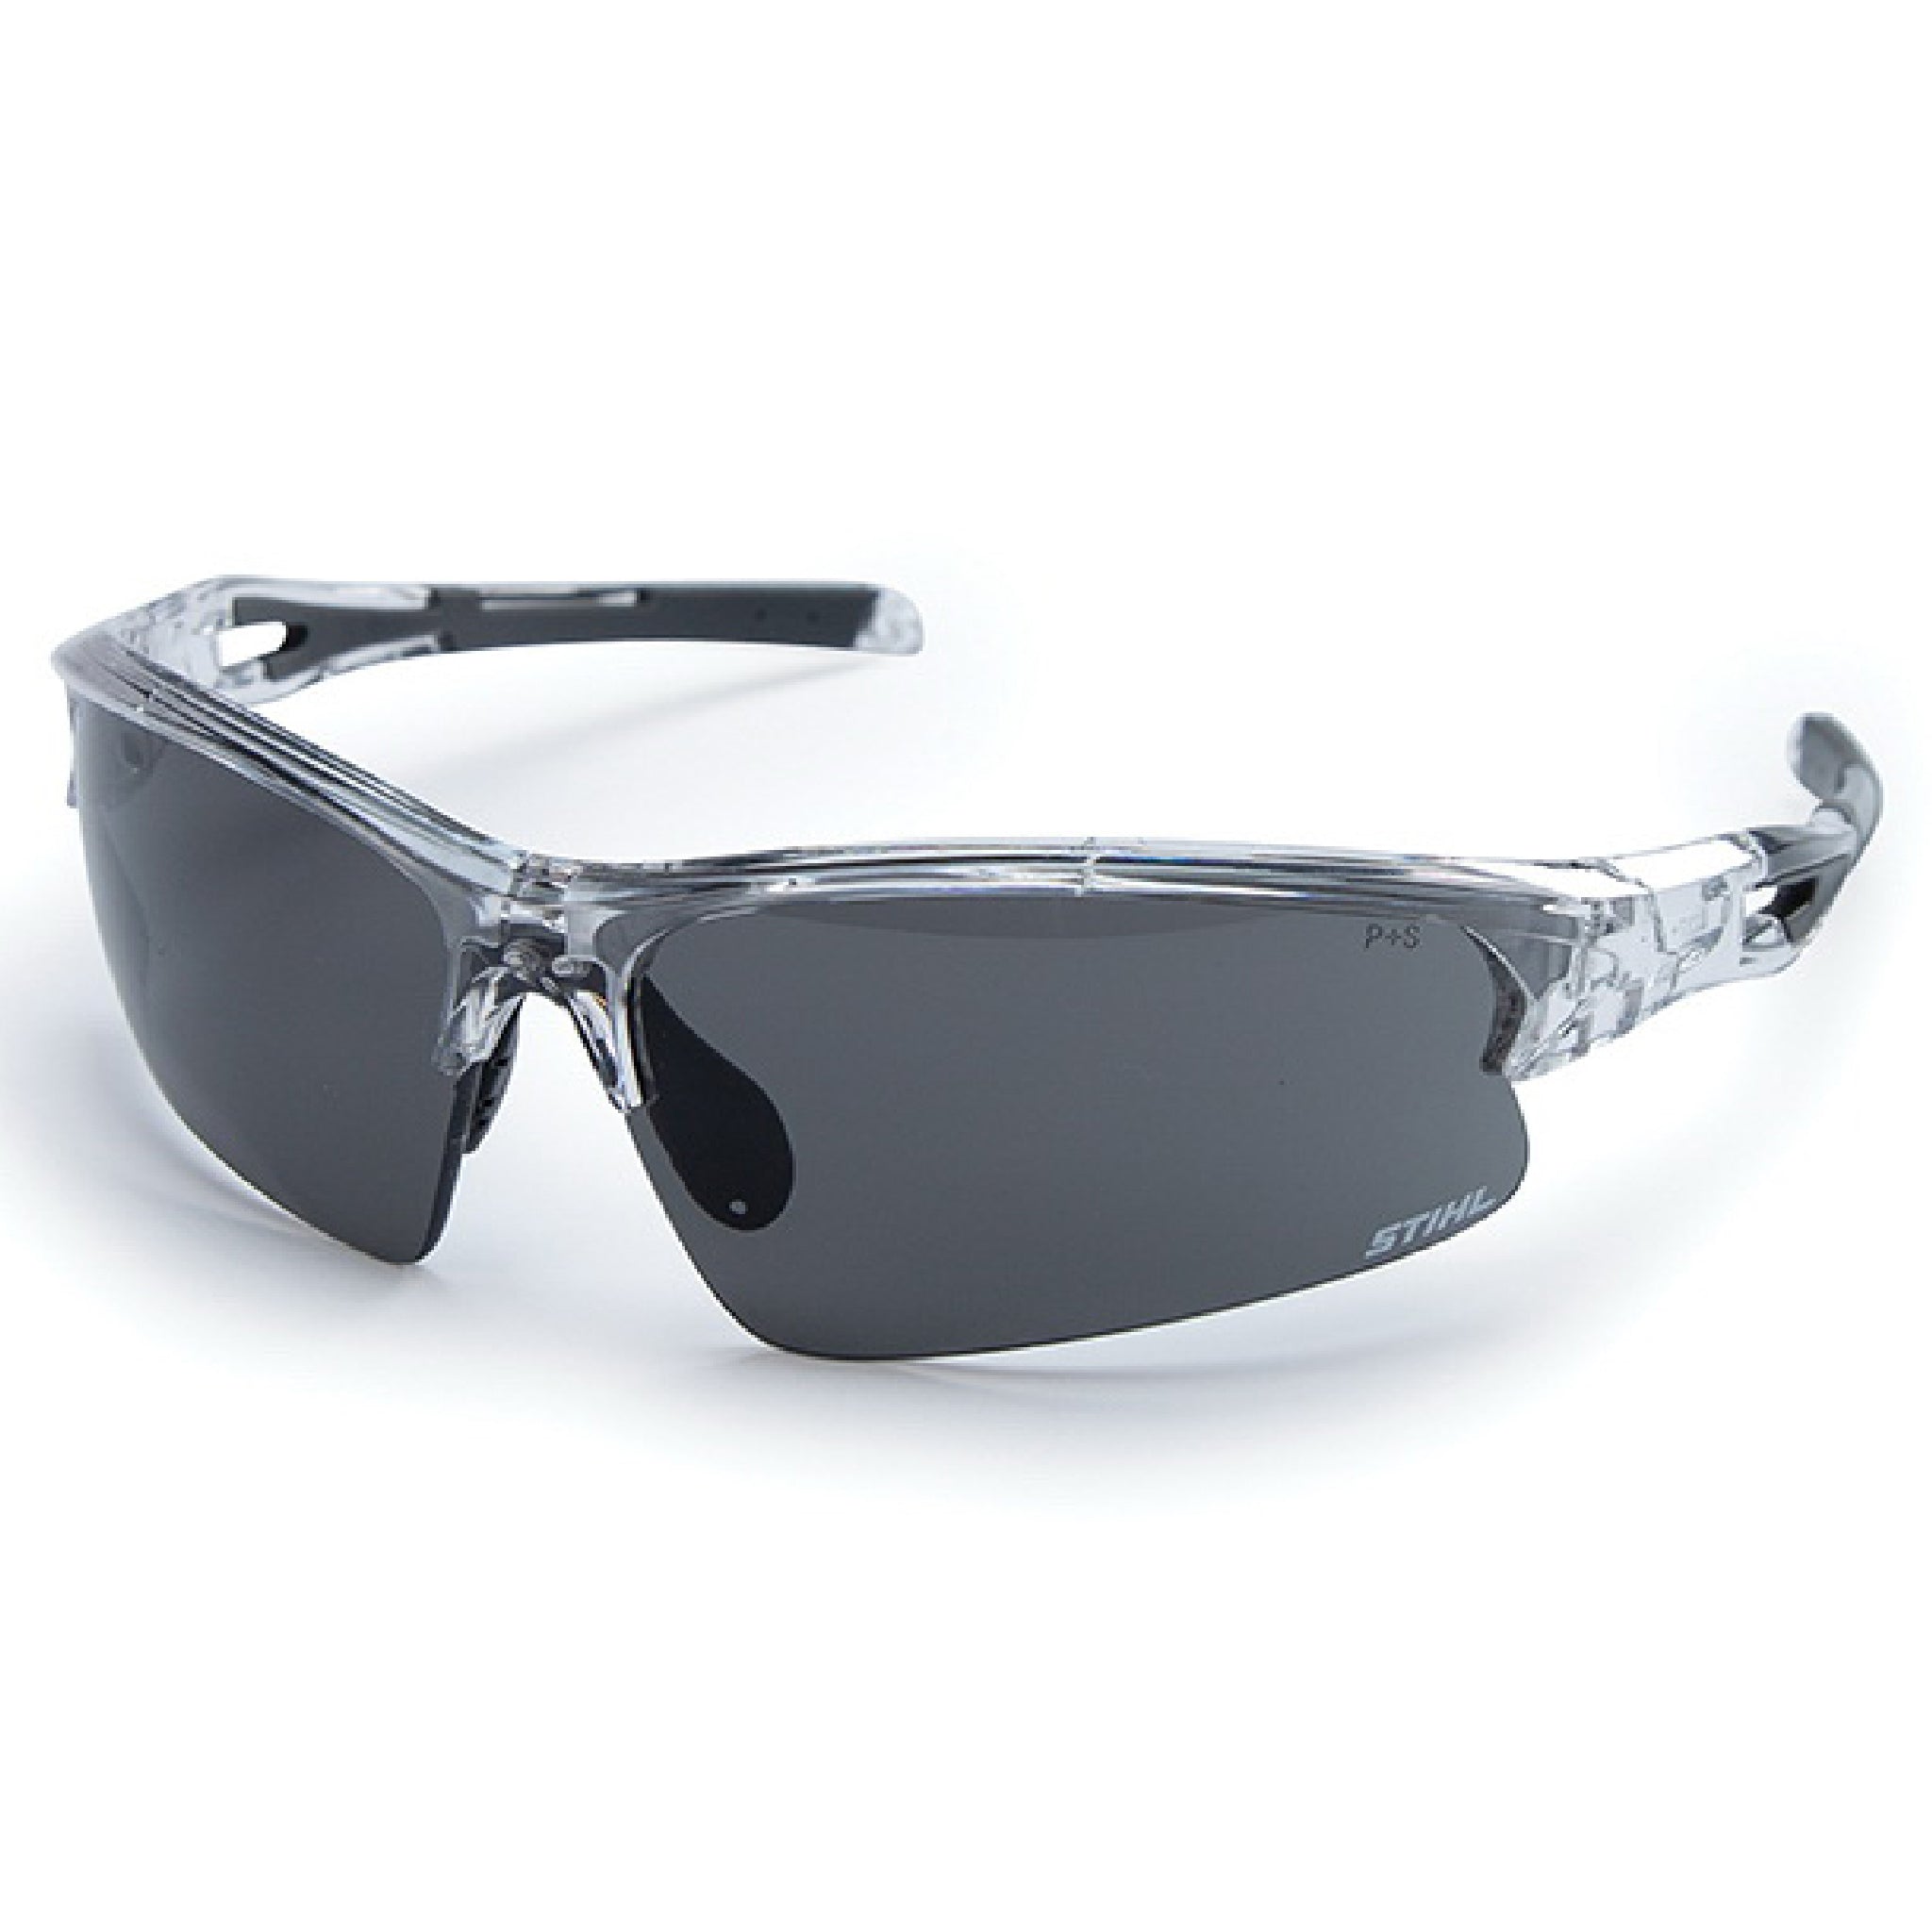 Stihl 7010 884 0398 Vista Series Protective Glasses